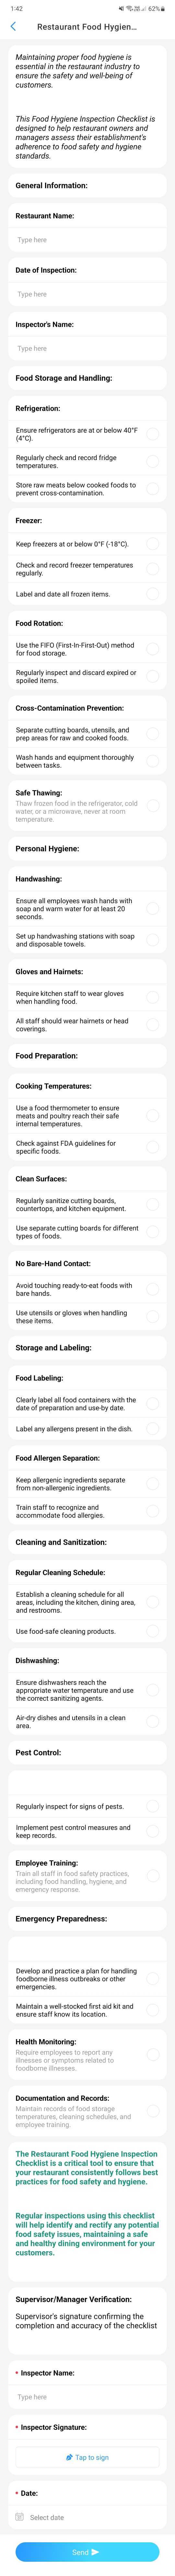 Restaurant Food Hygiene Inspection Checklist Template